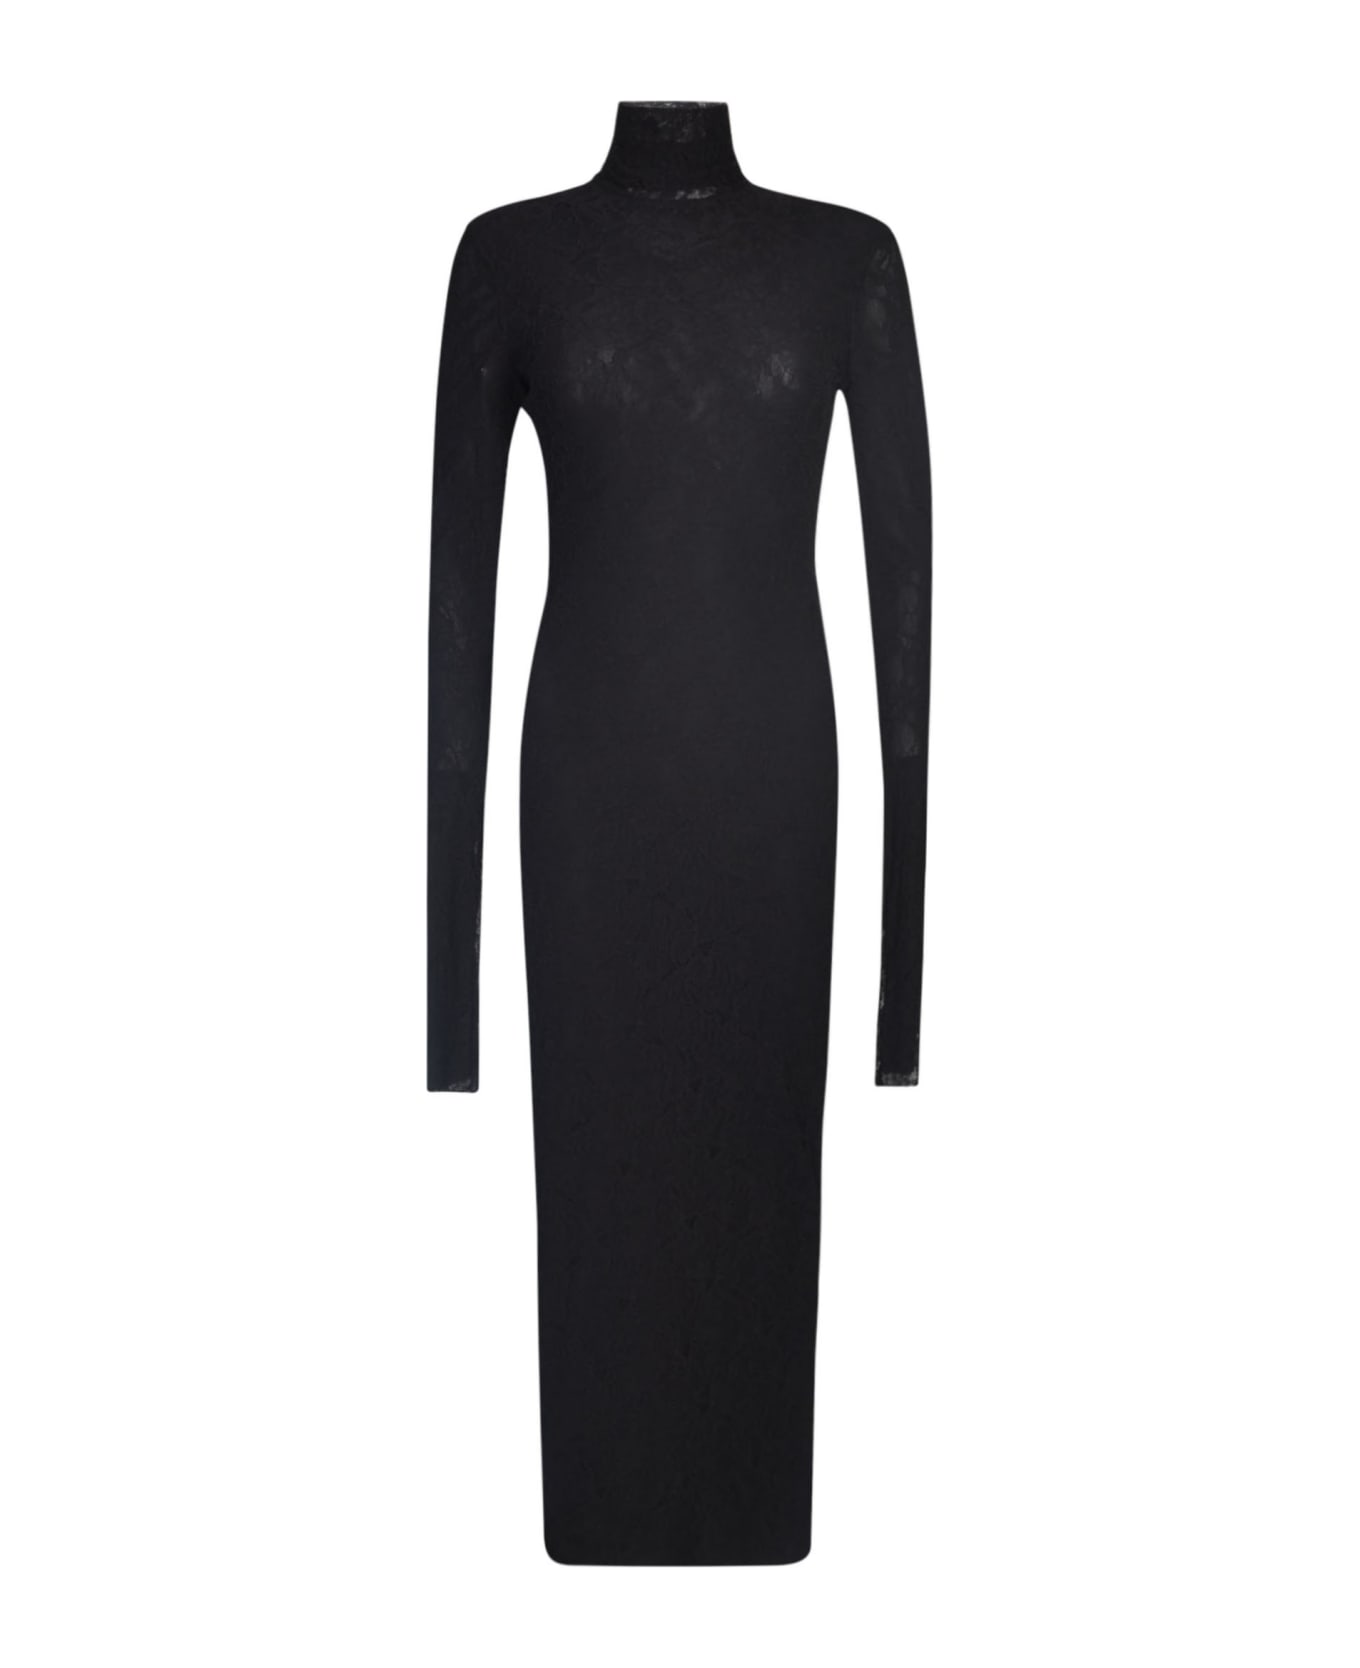 Philosophy di Lorenzo Serafini Lace Paneled Turtleneck Longsleeved Dress - Black